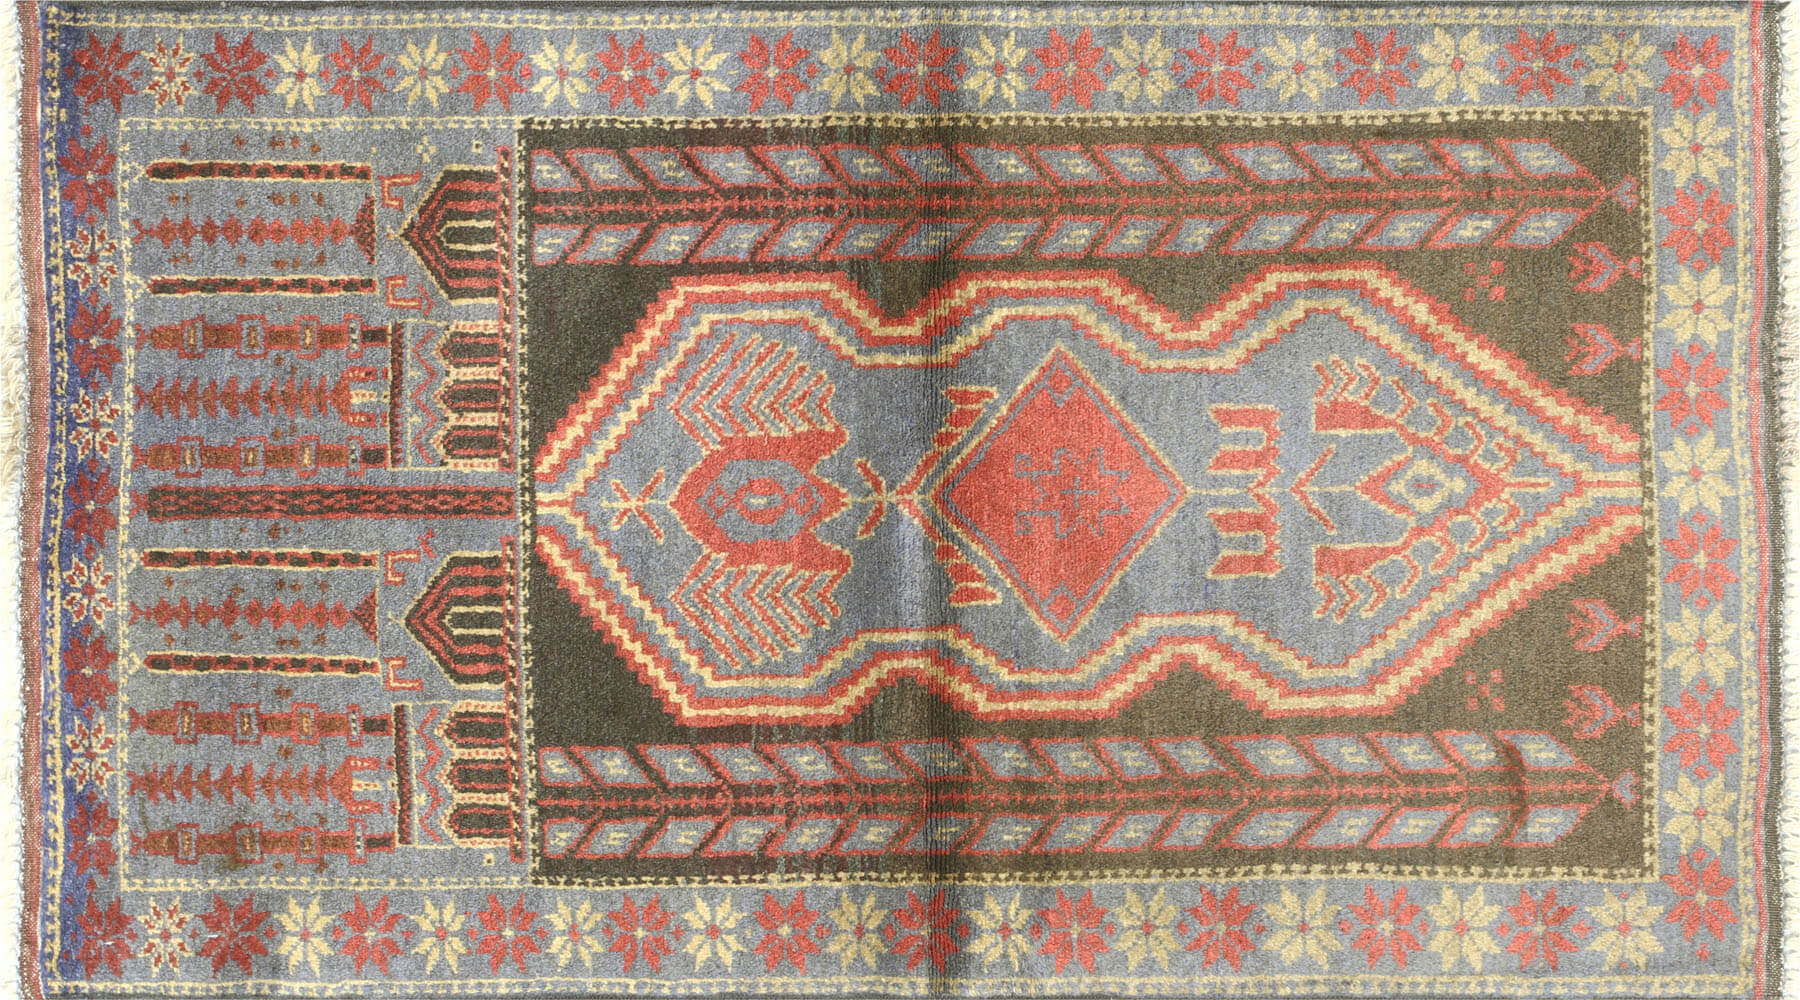 Vintage Afghan Balouch Rug - 2'7" x 4'7"